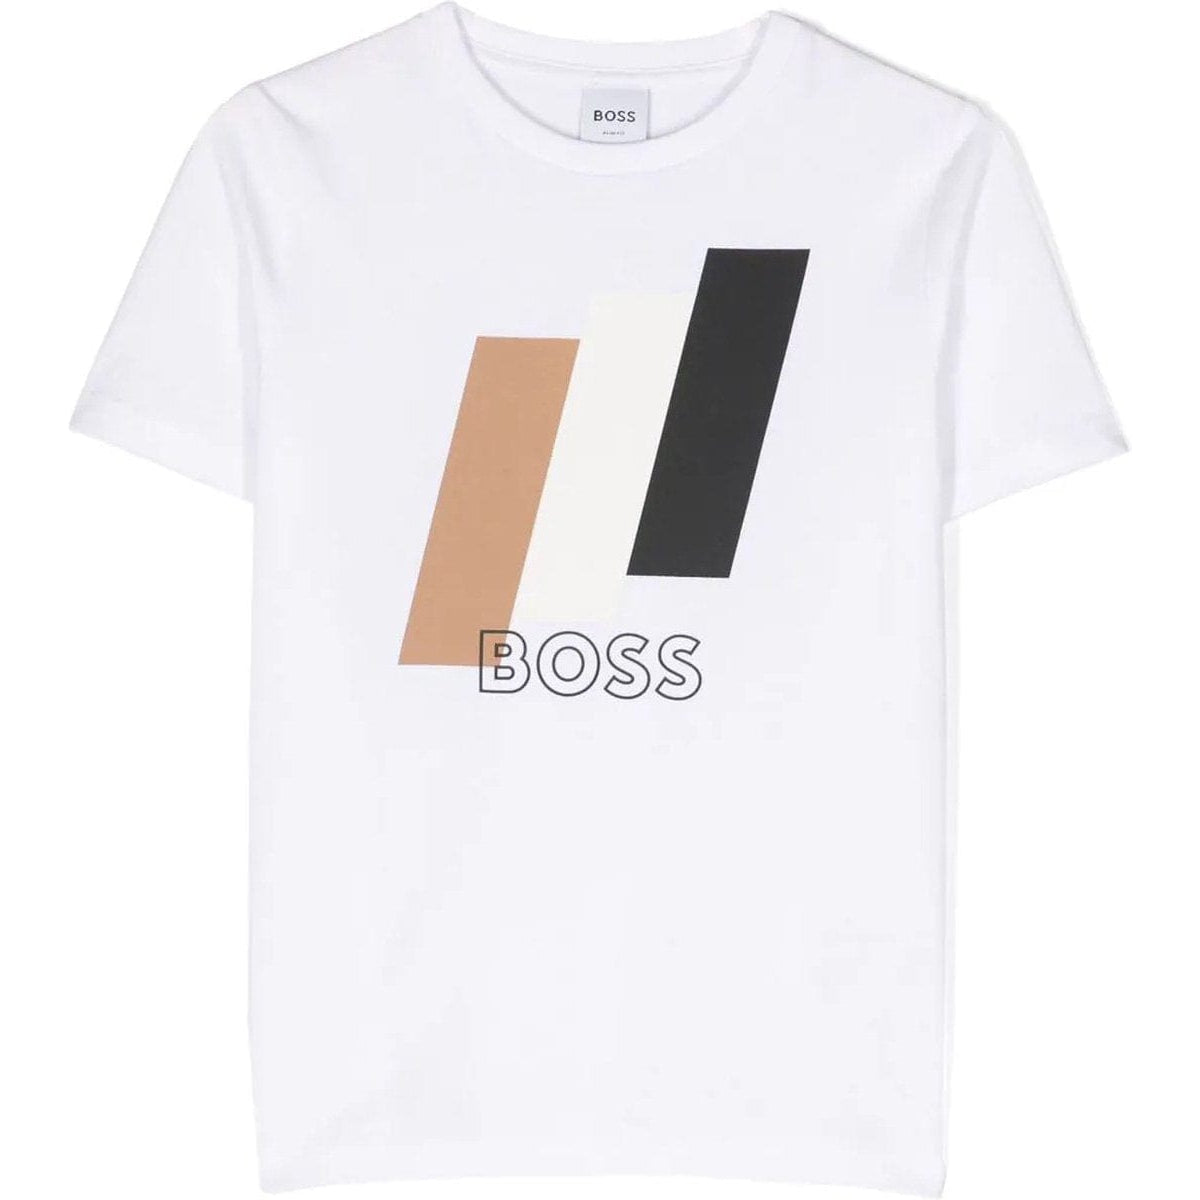 Boss Top J25O81 Boss Boys White Casual Short Sleeves Tee-Shirt